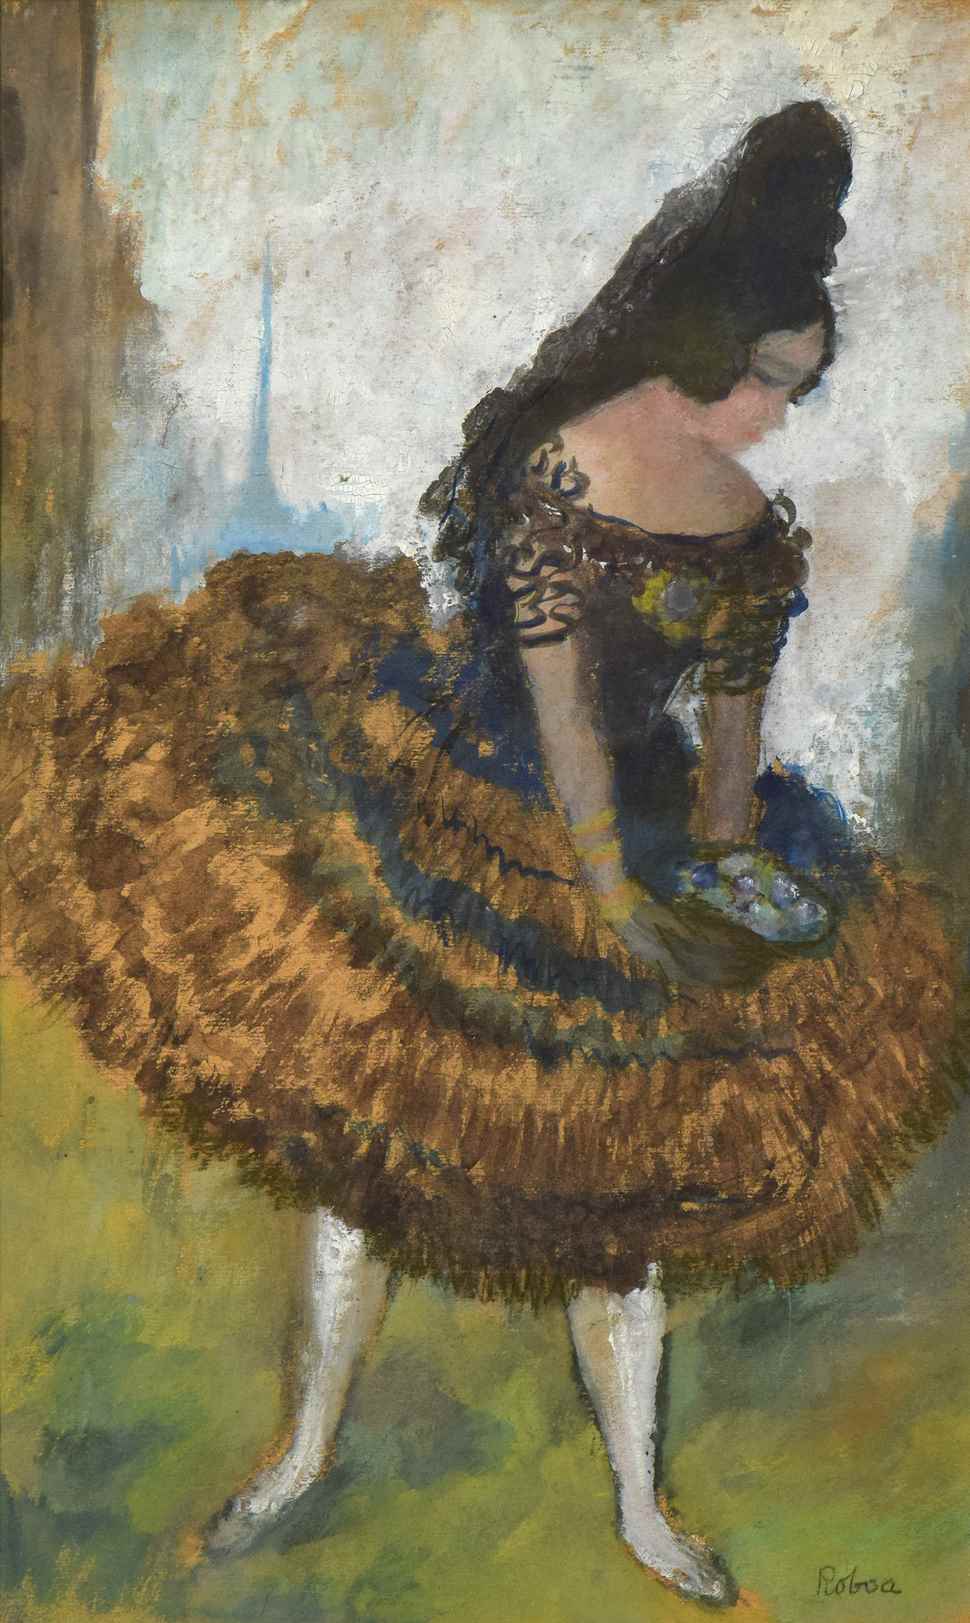 Flamenco Dancer - Roboa Pissarro (1878 - 1945)